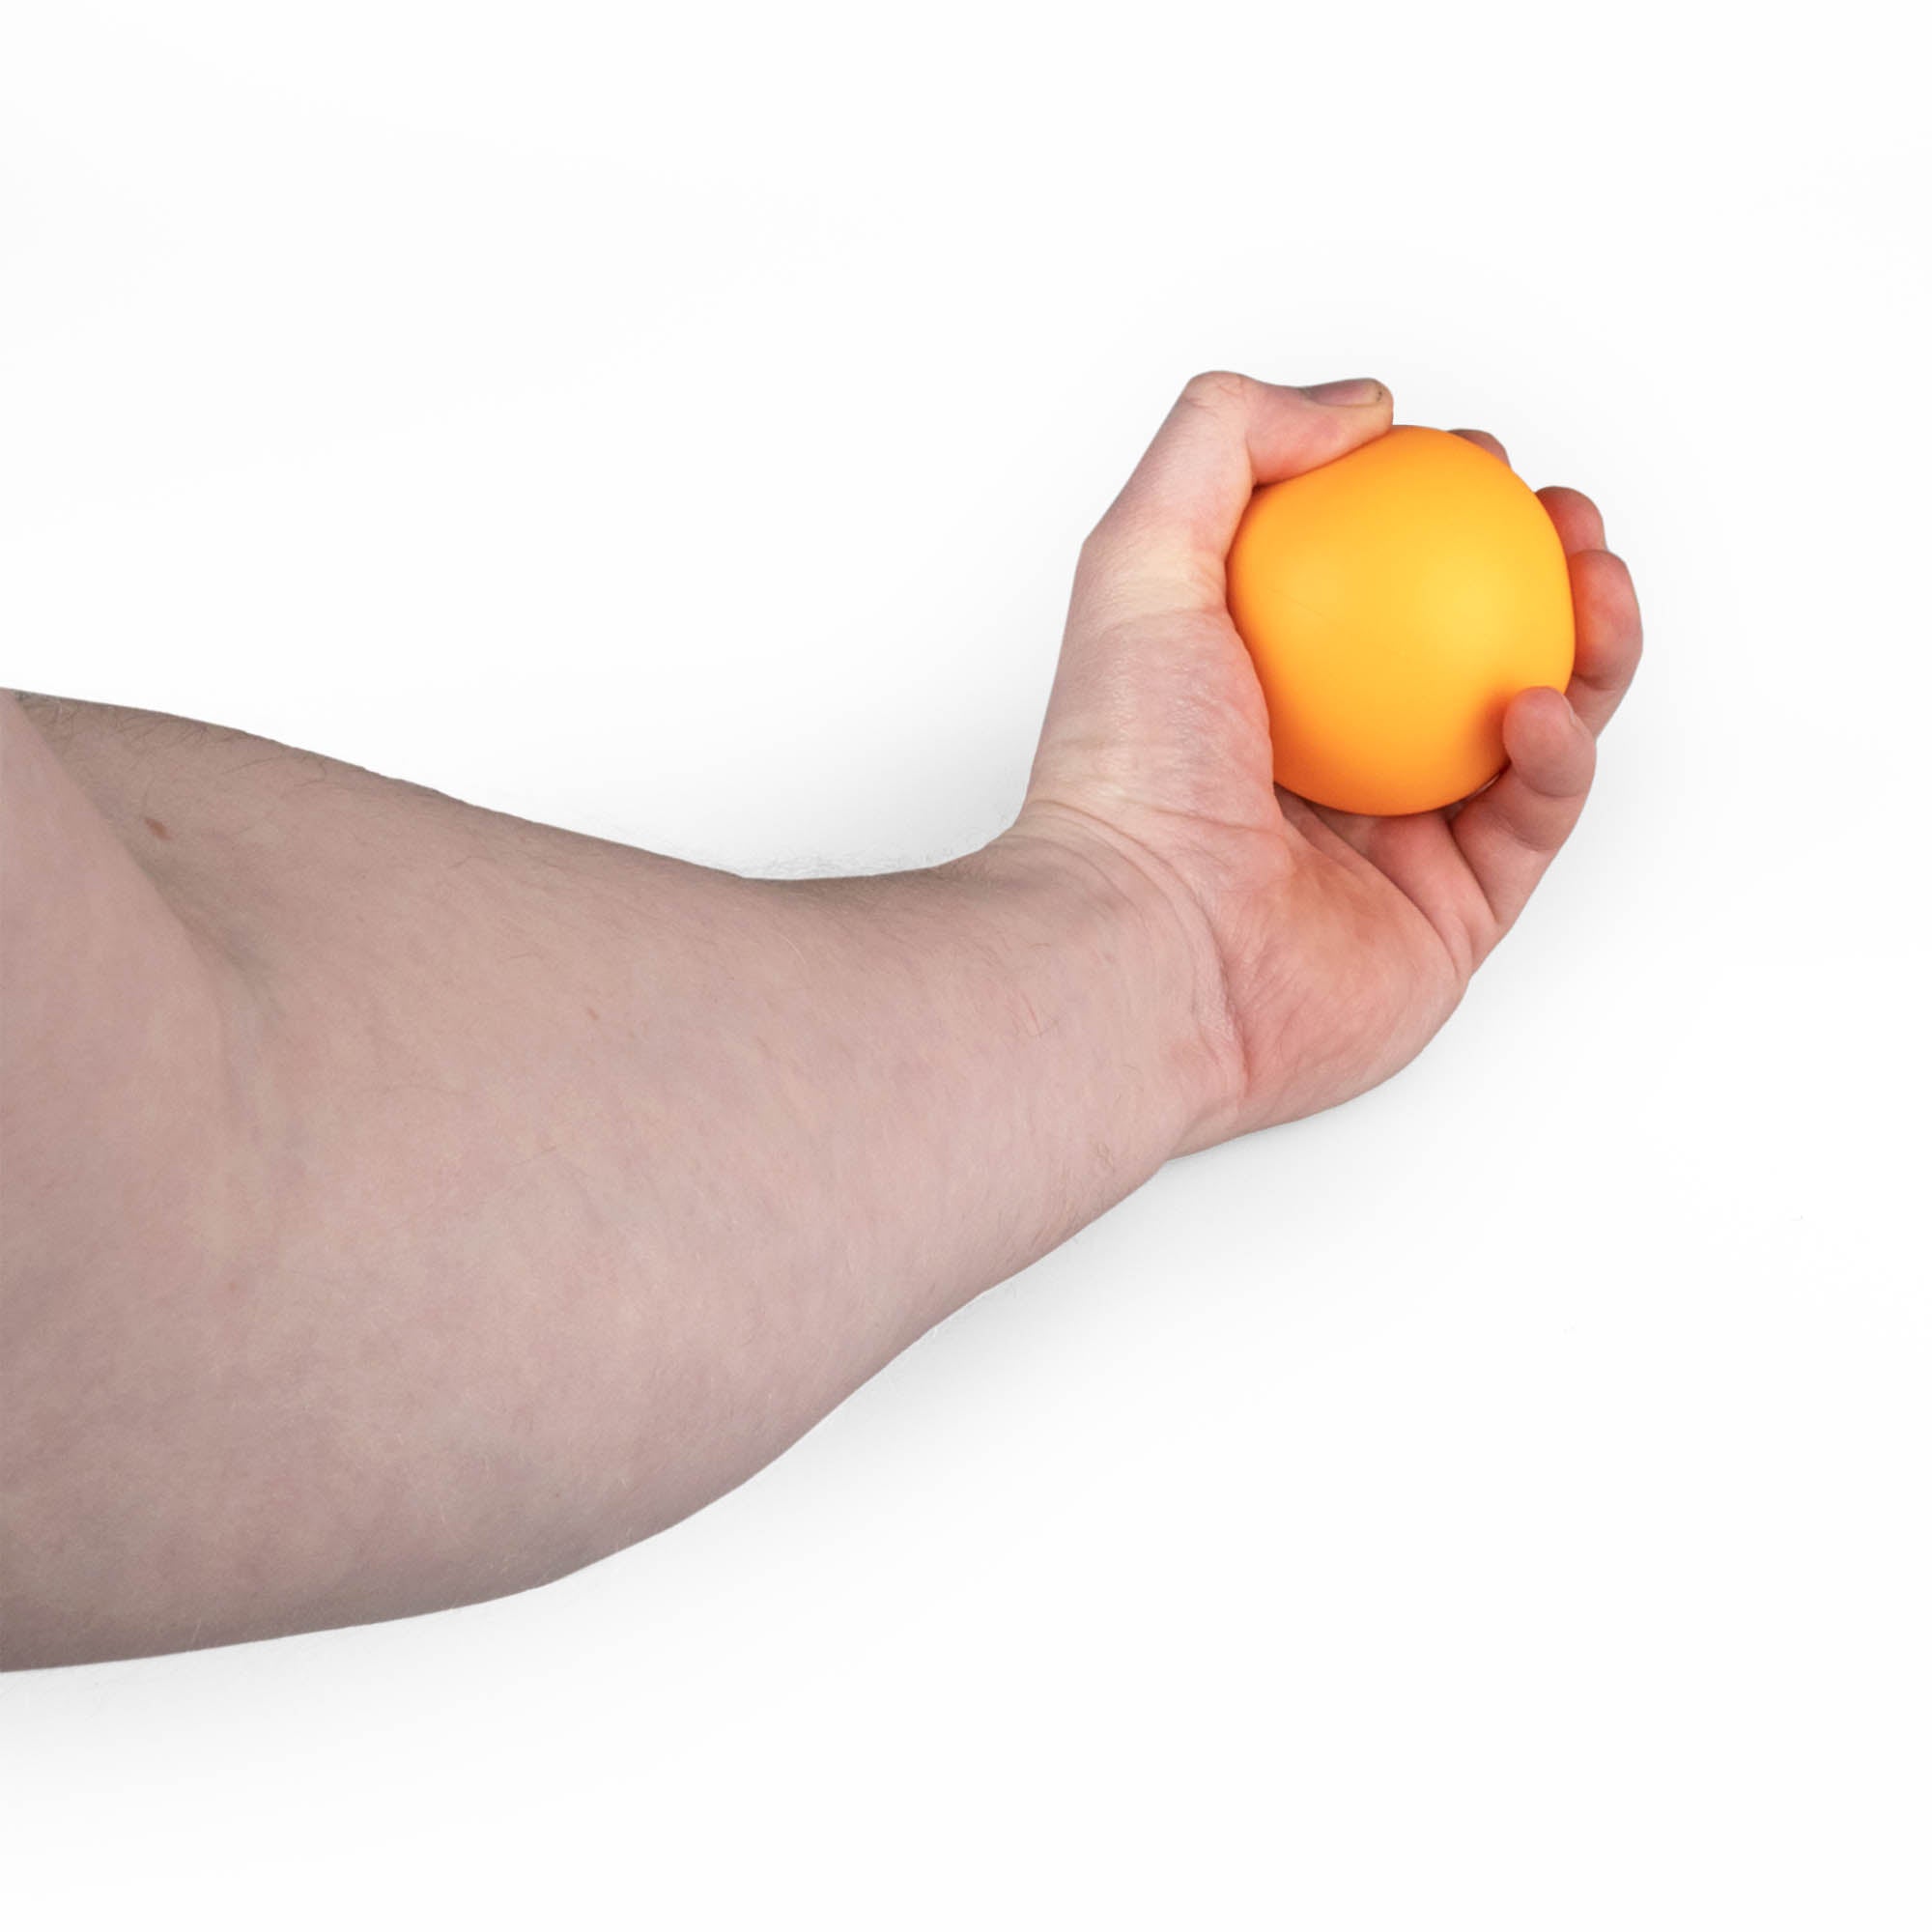 MMX 67mm juggling ball orange in hand